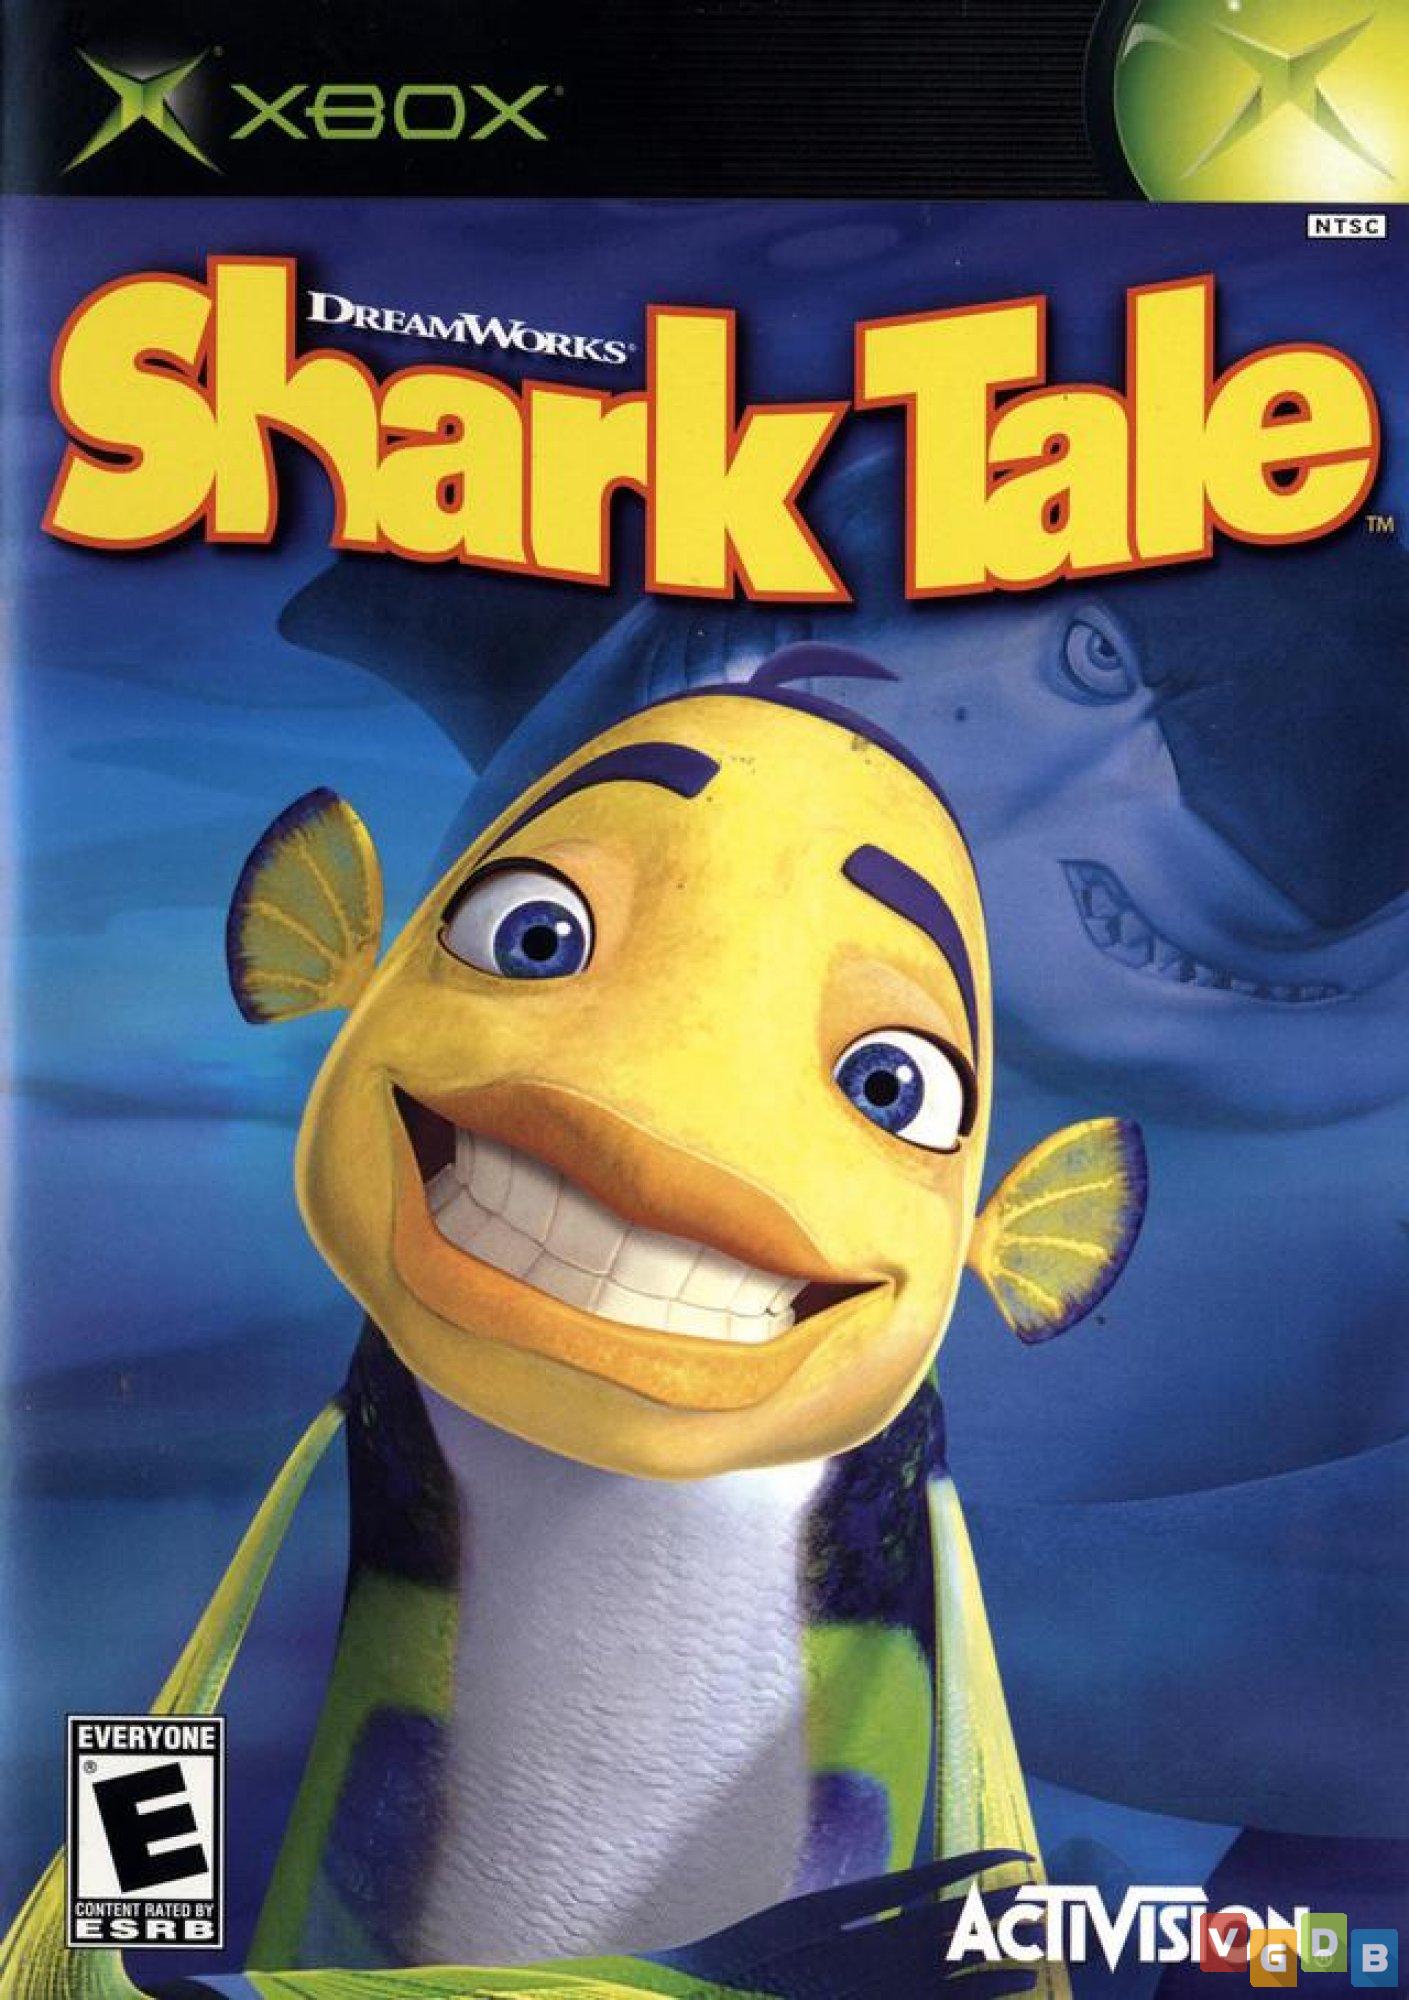 SHARK TALE (PS2/GAMECUBE/XBOX) #4 - O Espanta Tubarões no